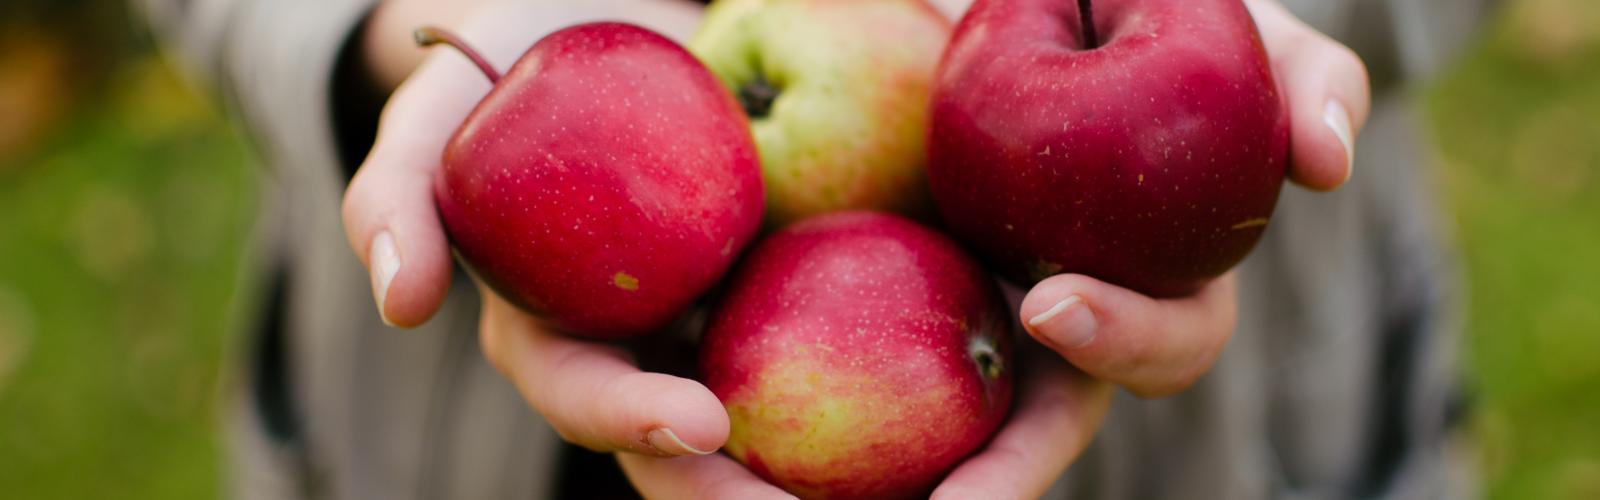 Conceit atoom mode Steeds meer goesting in lokale appels | MVO Vlaanderen